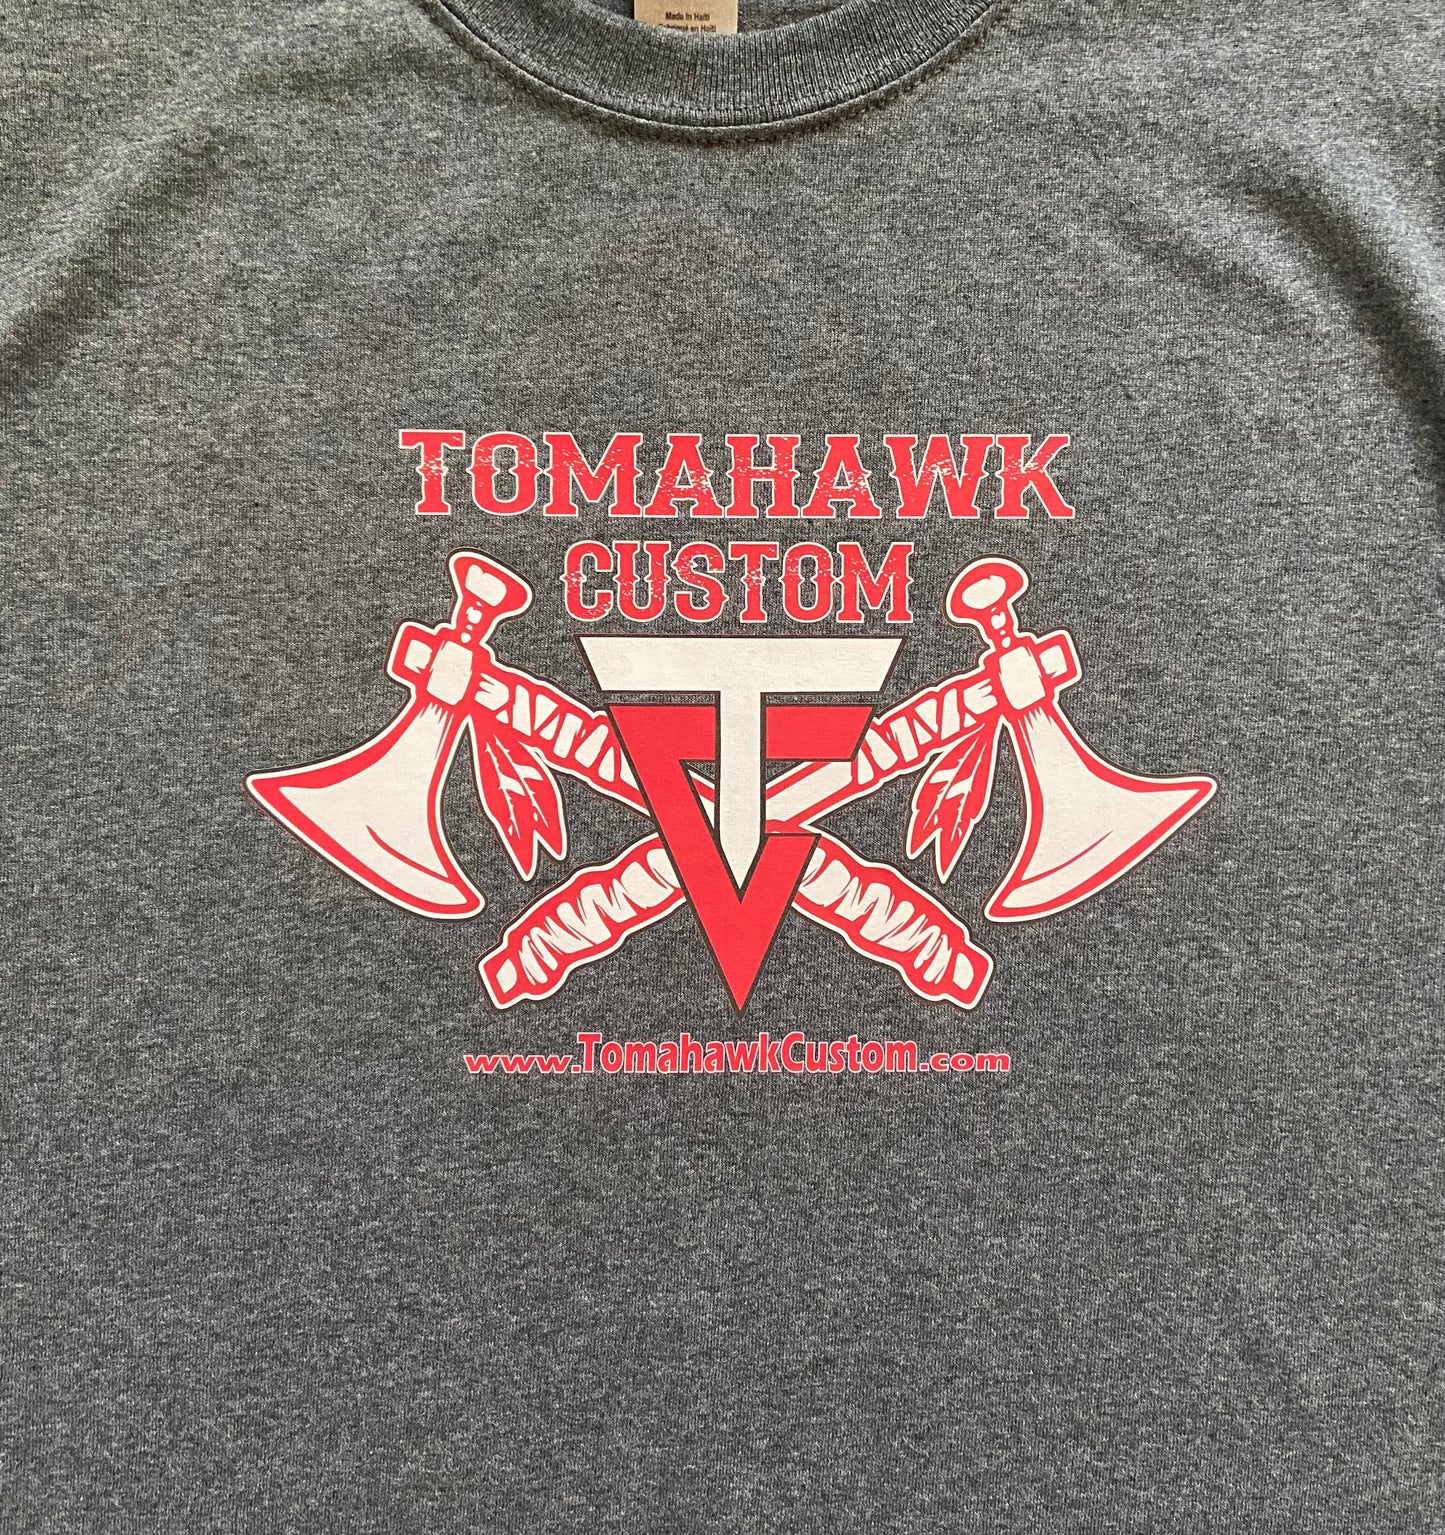 Tomahawk Custom Company Logo T-Shirt - Tomahawk Blue, Black, or Dark Grey